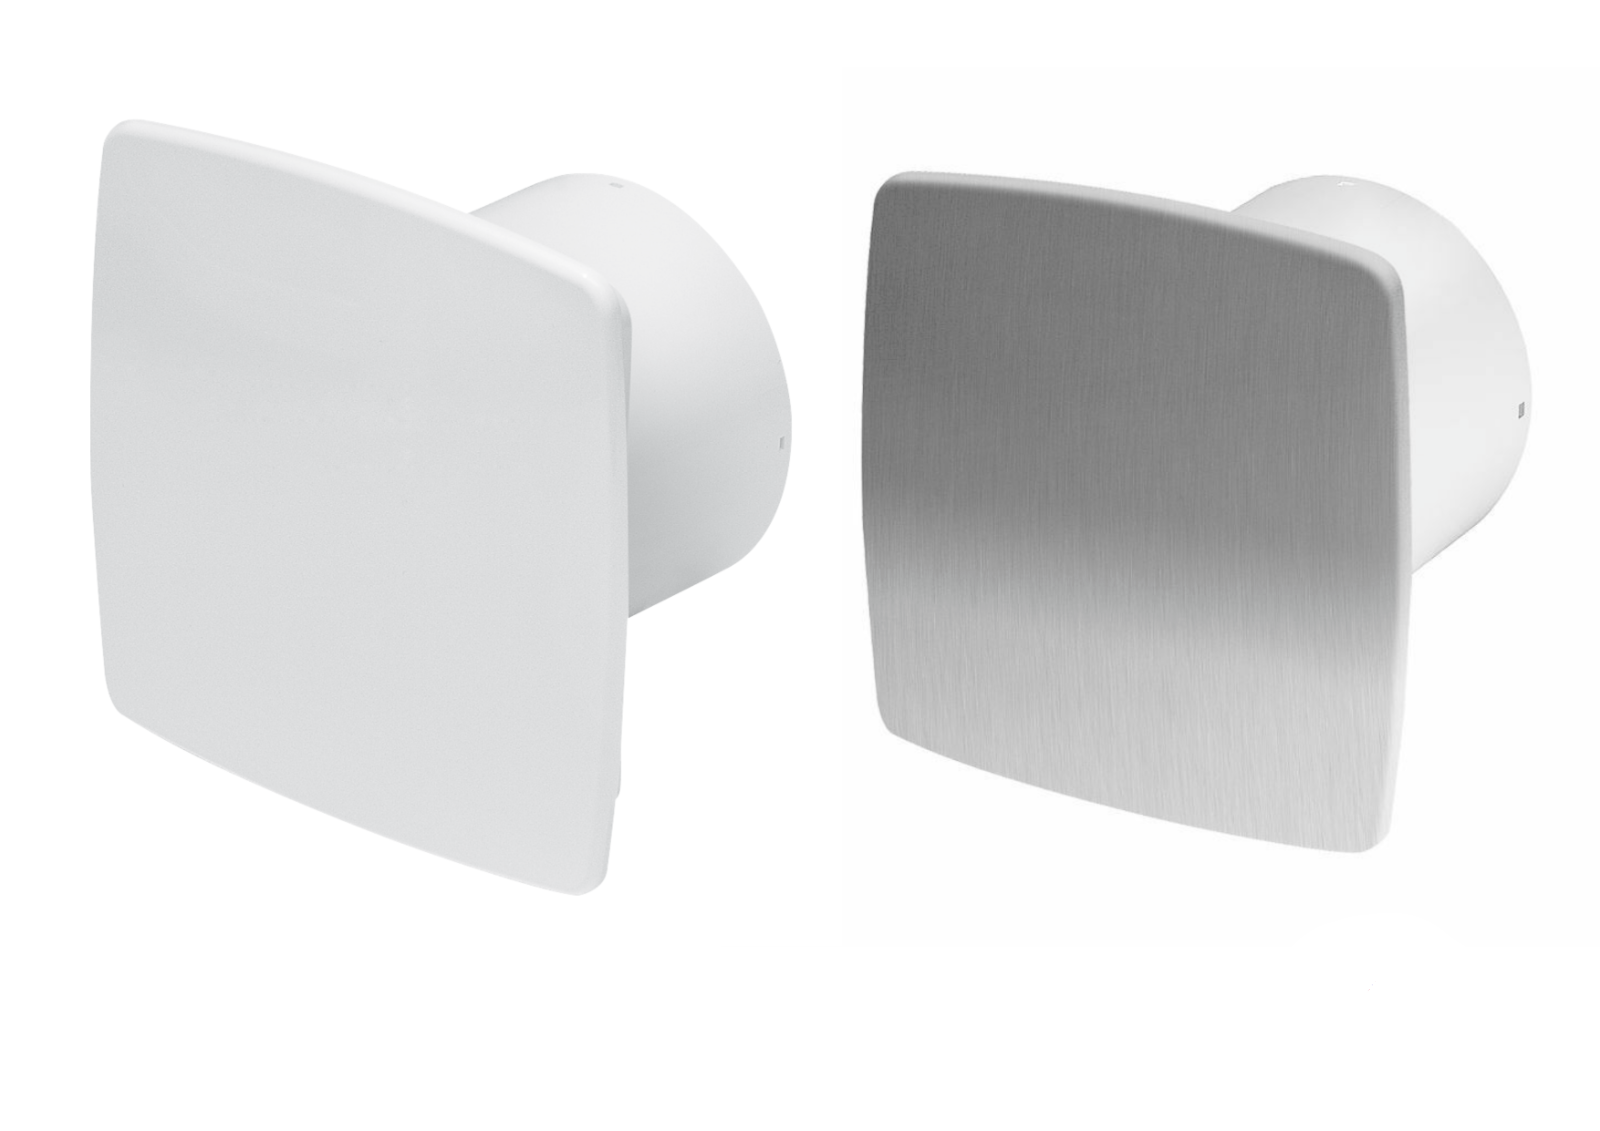 Swiftair Bathroom Shower Extractor Fan Timer Humidistat White chrome